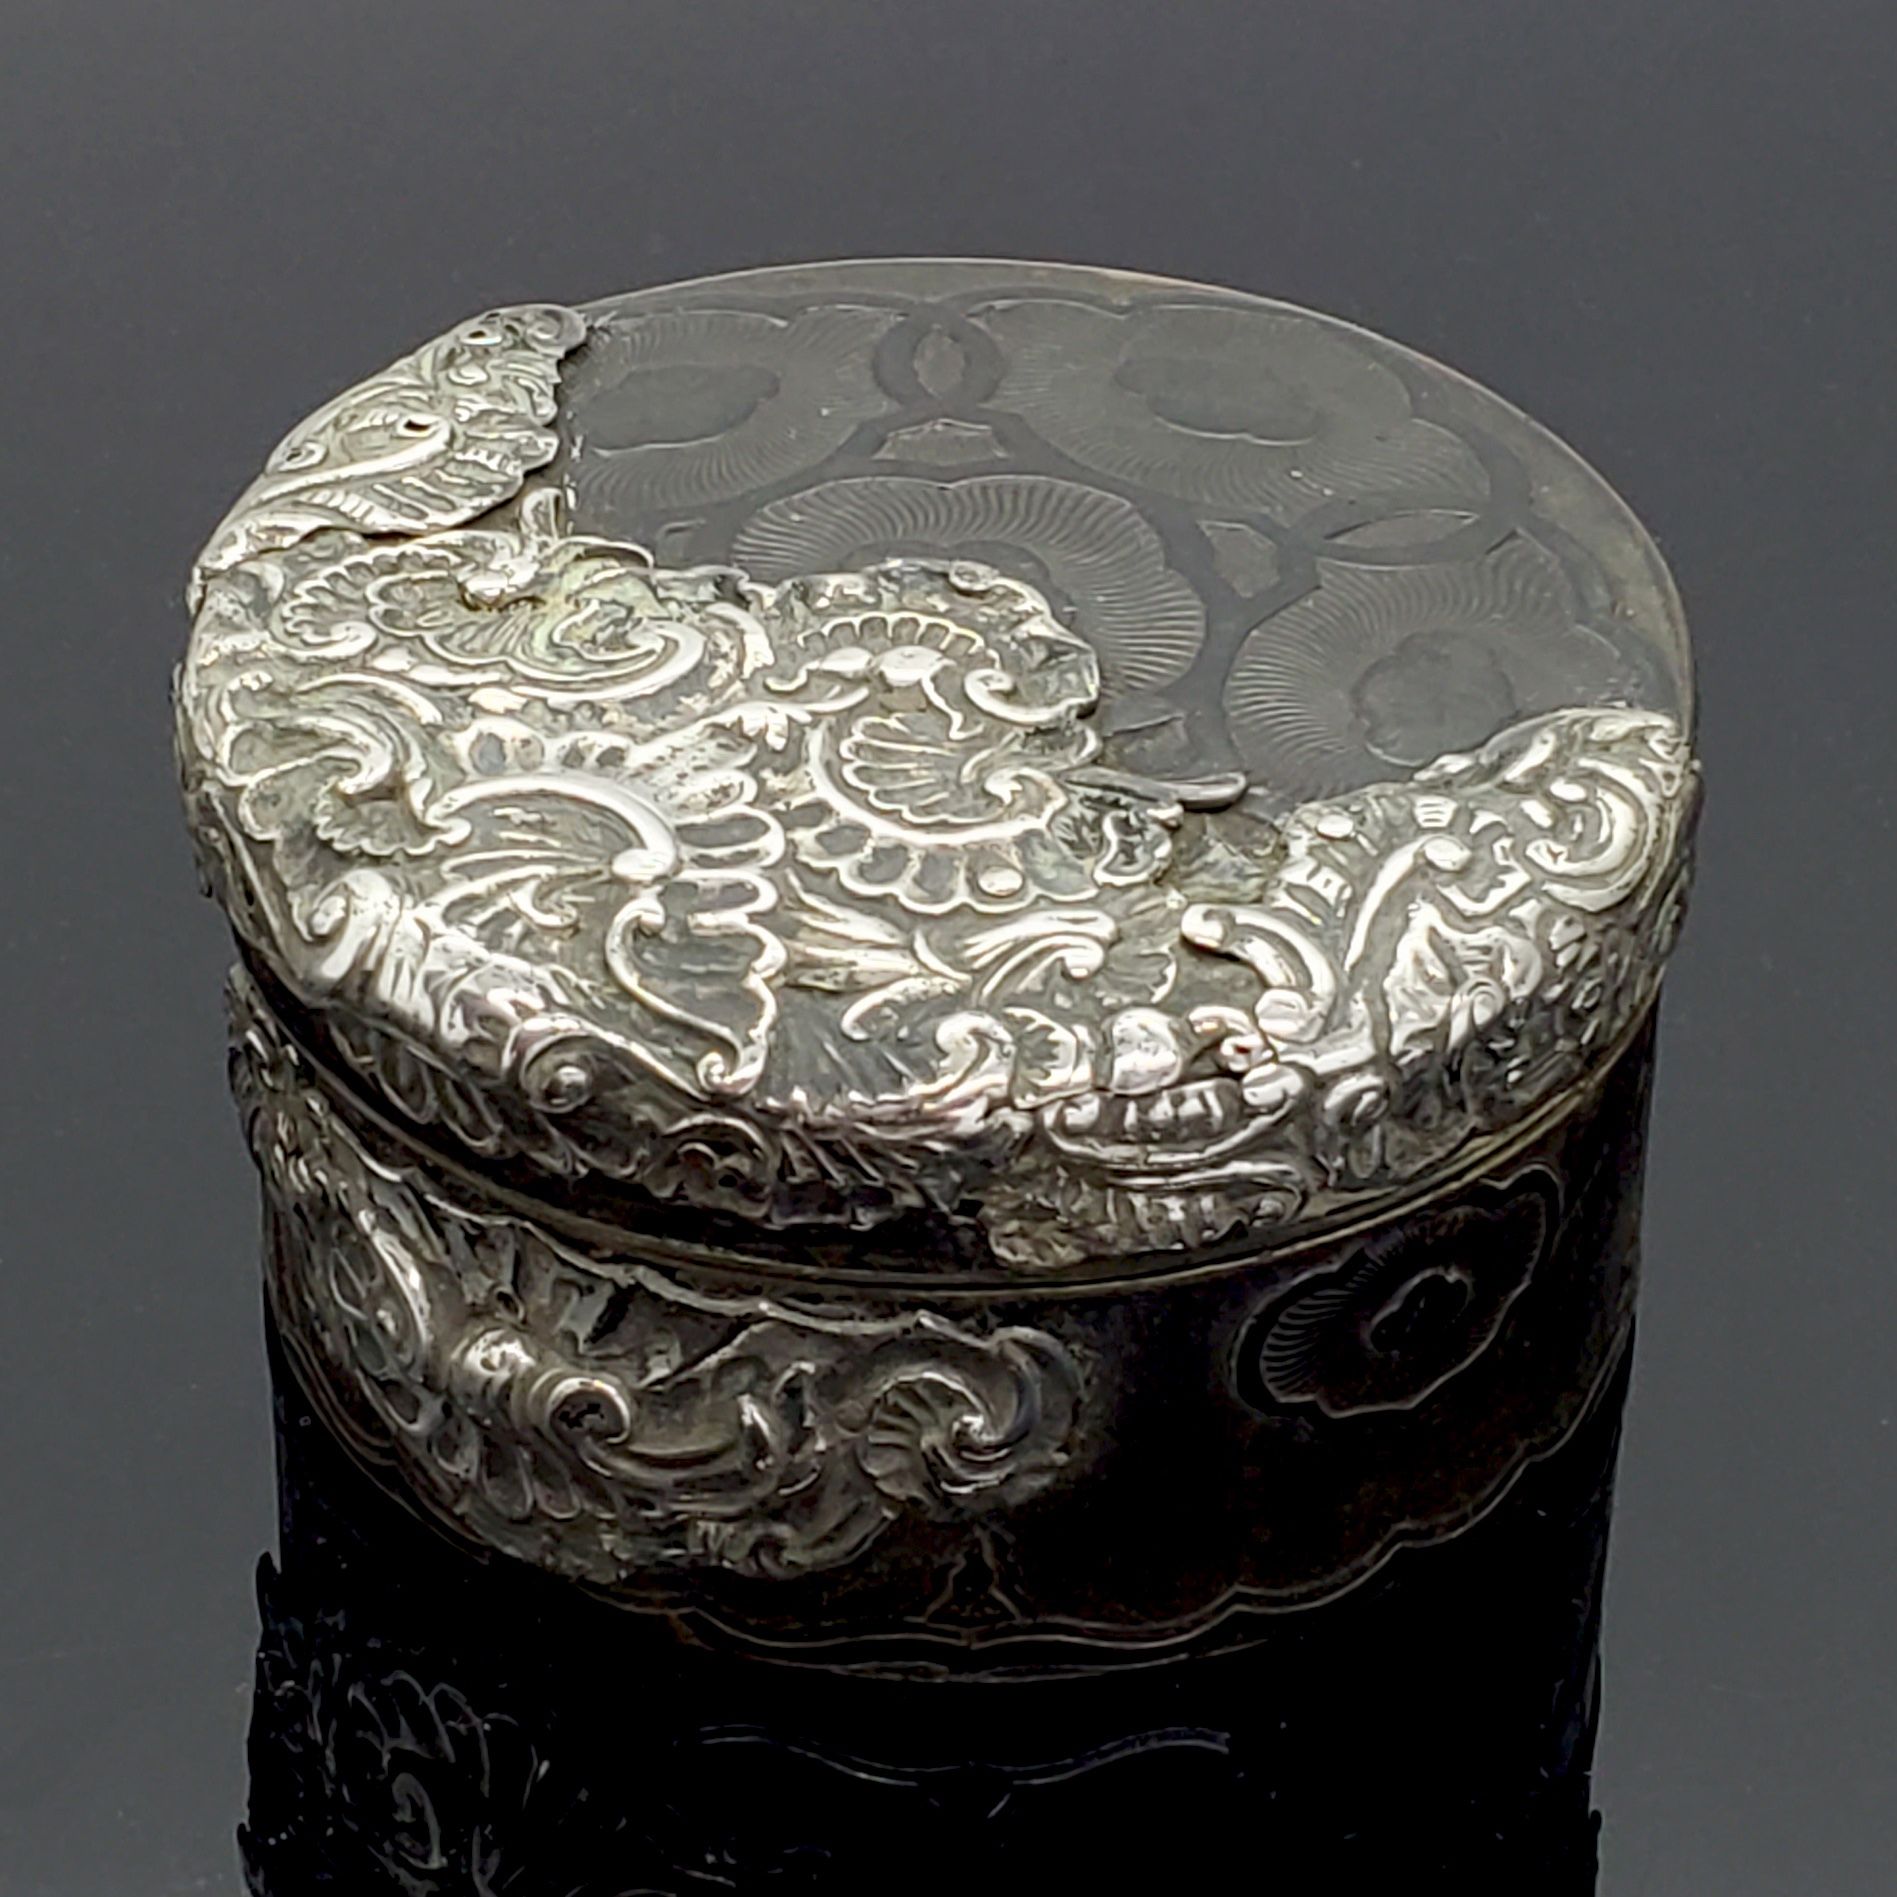 Null 龟甲盒上装饰有日本风格的放射状奖章，银制的Rocaille风格安装。18-19世纪的外国作品，4.5 x 8.5厘米